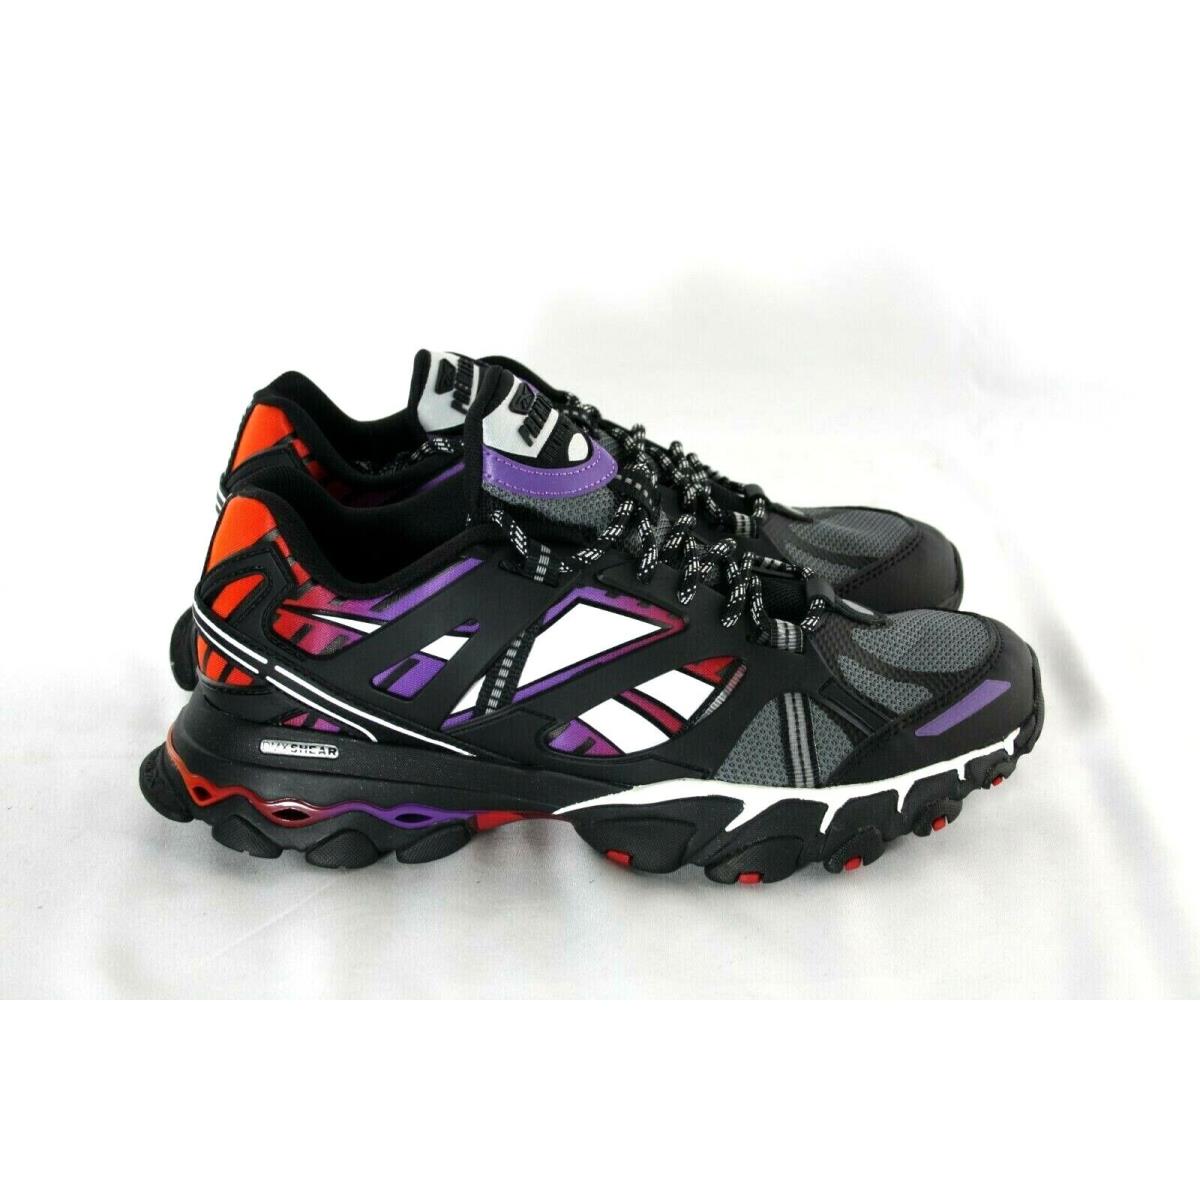 Reebok shoes DMX TRAIL SHADOW - Multicolor 5